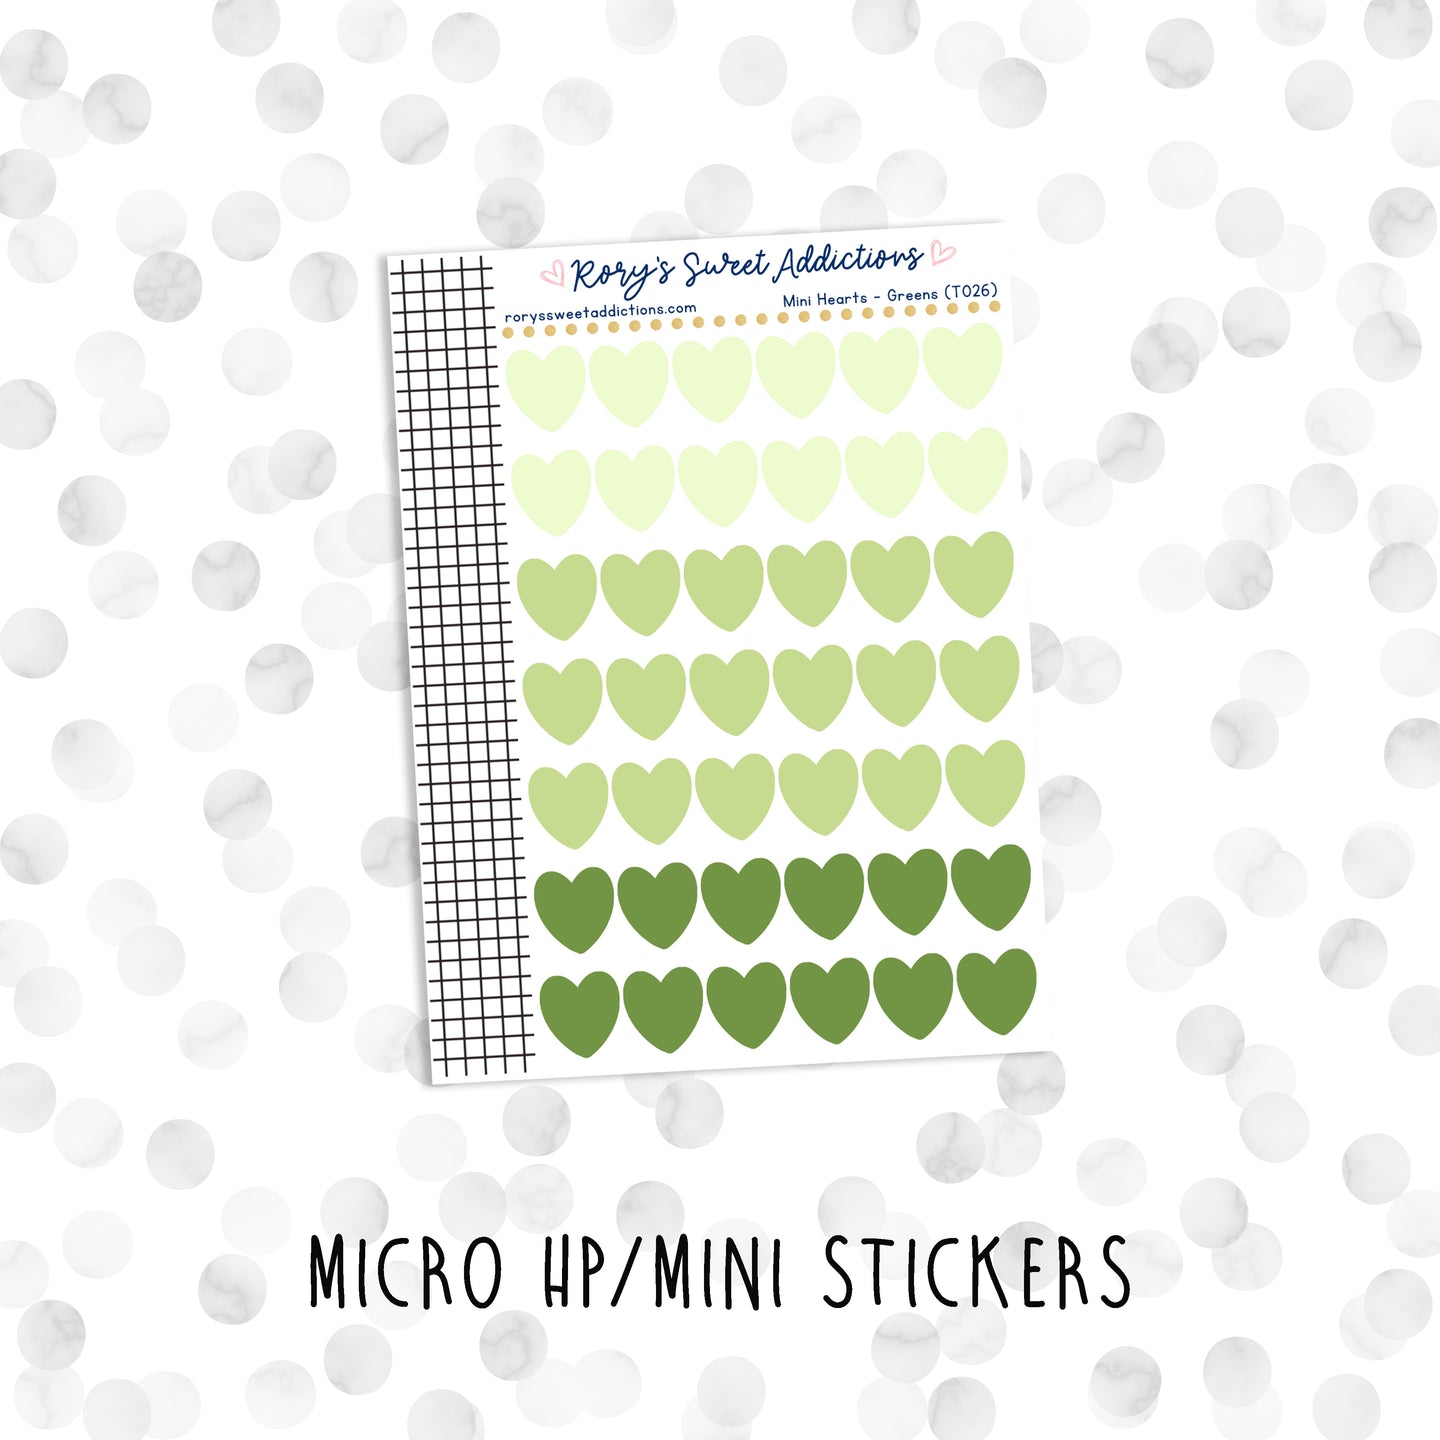 Mini Hearts - Greens // Micro HP - Mini Stickers